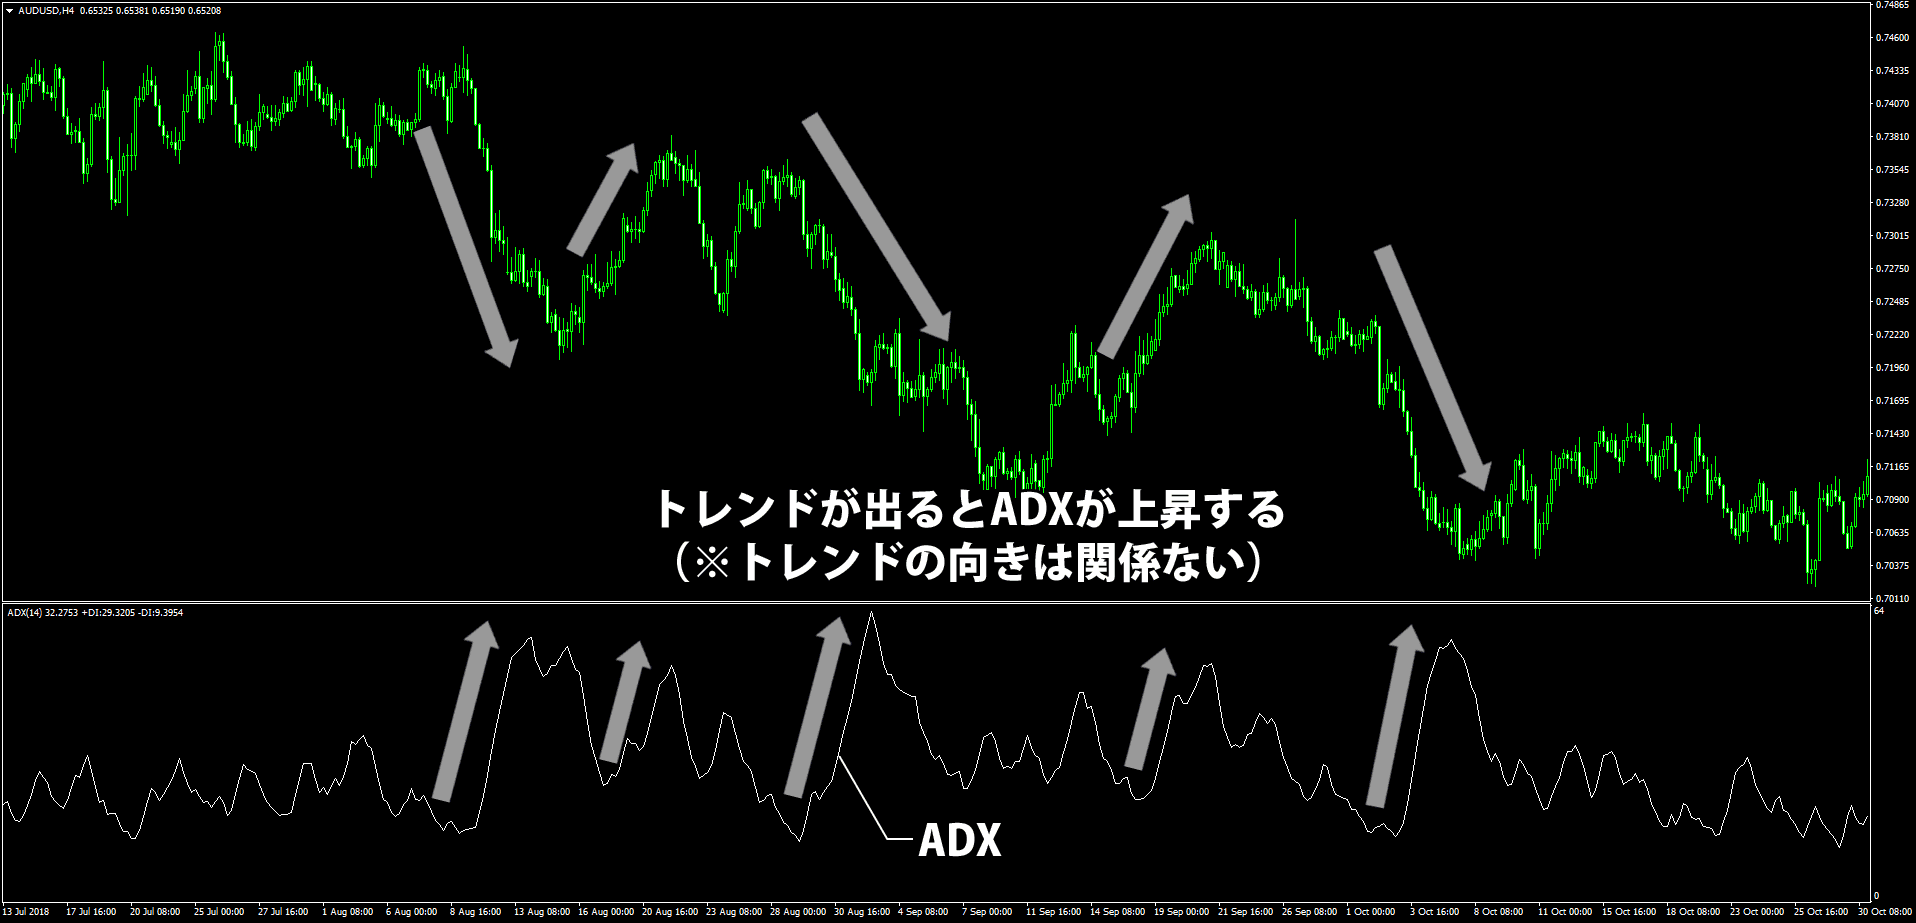 ADXと値動きの関係性